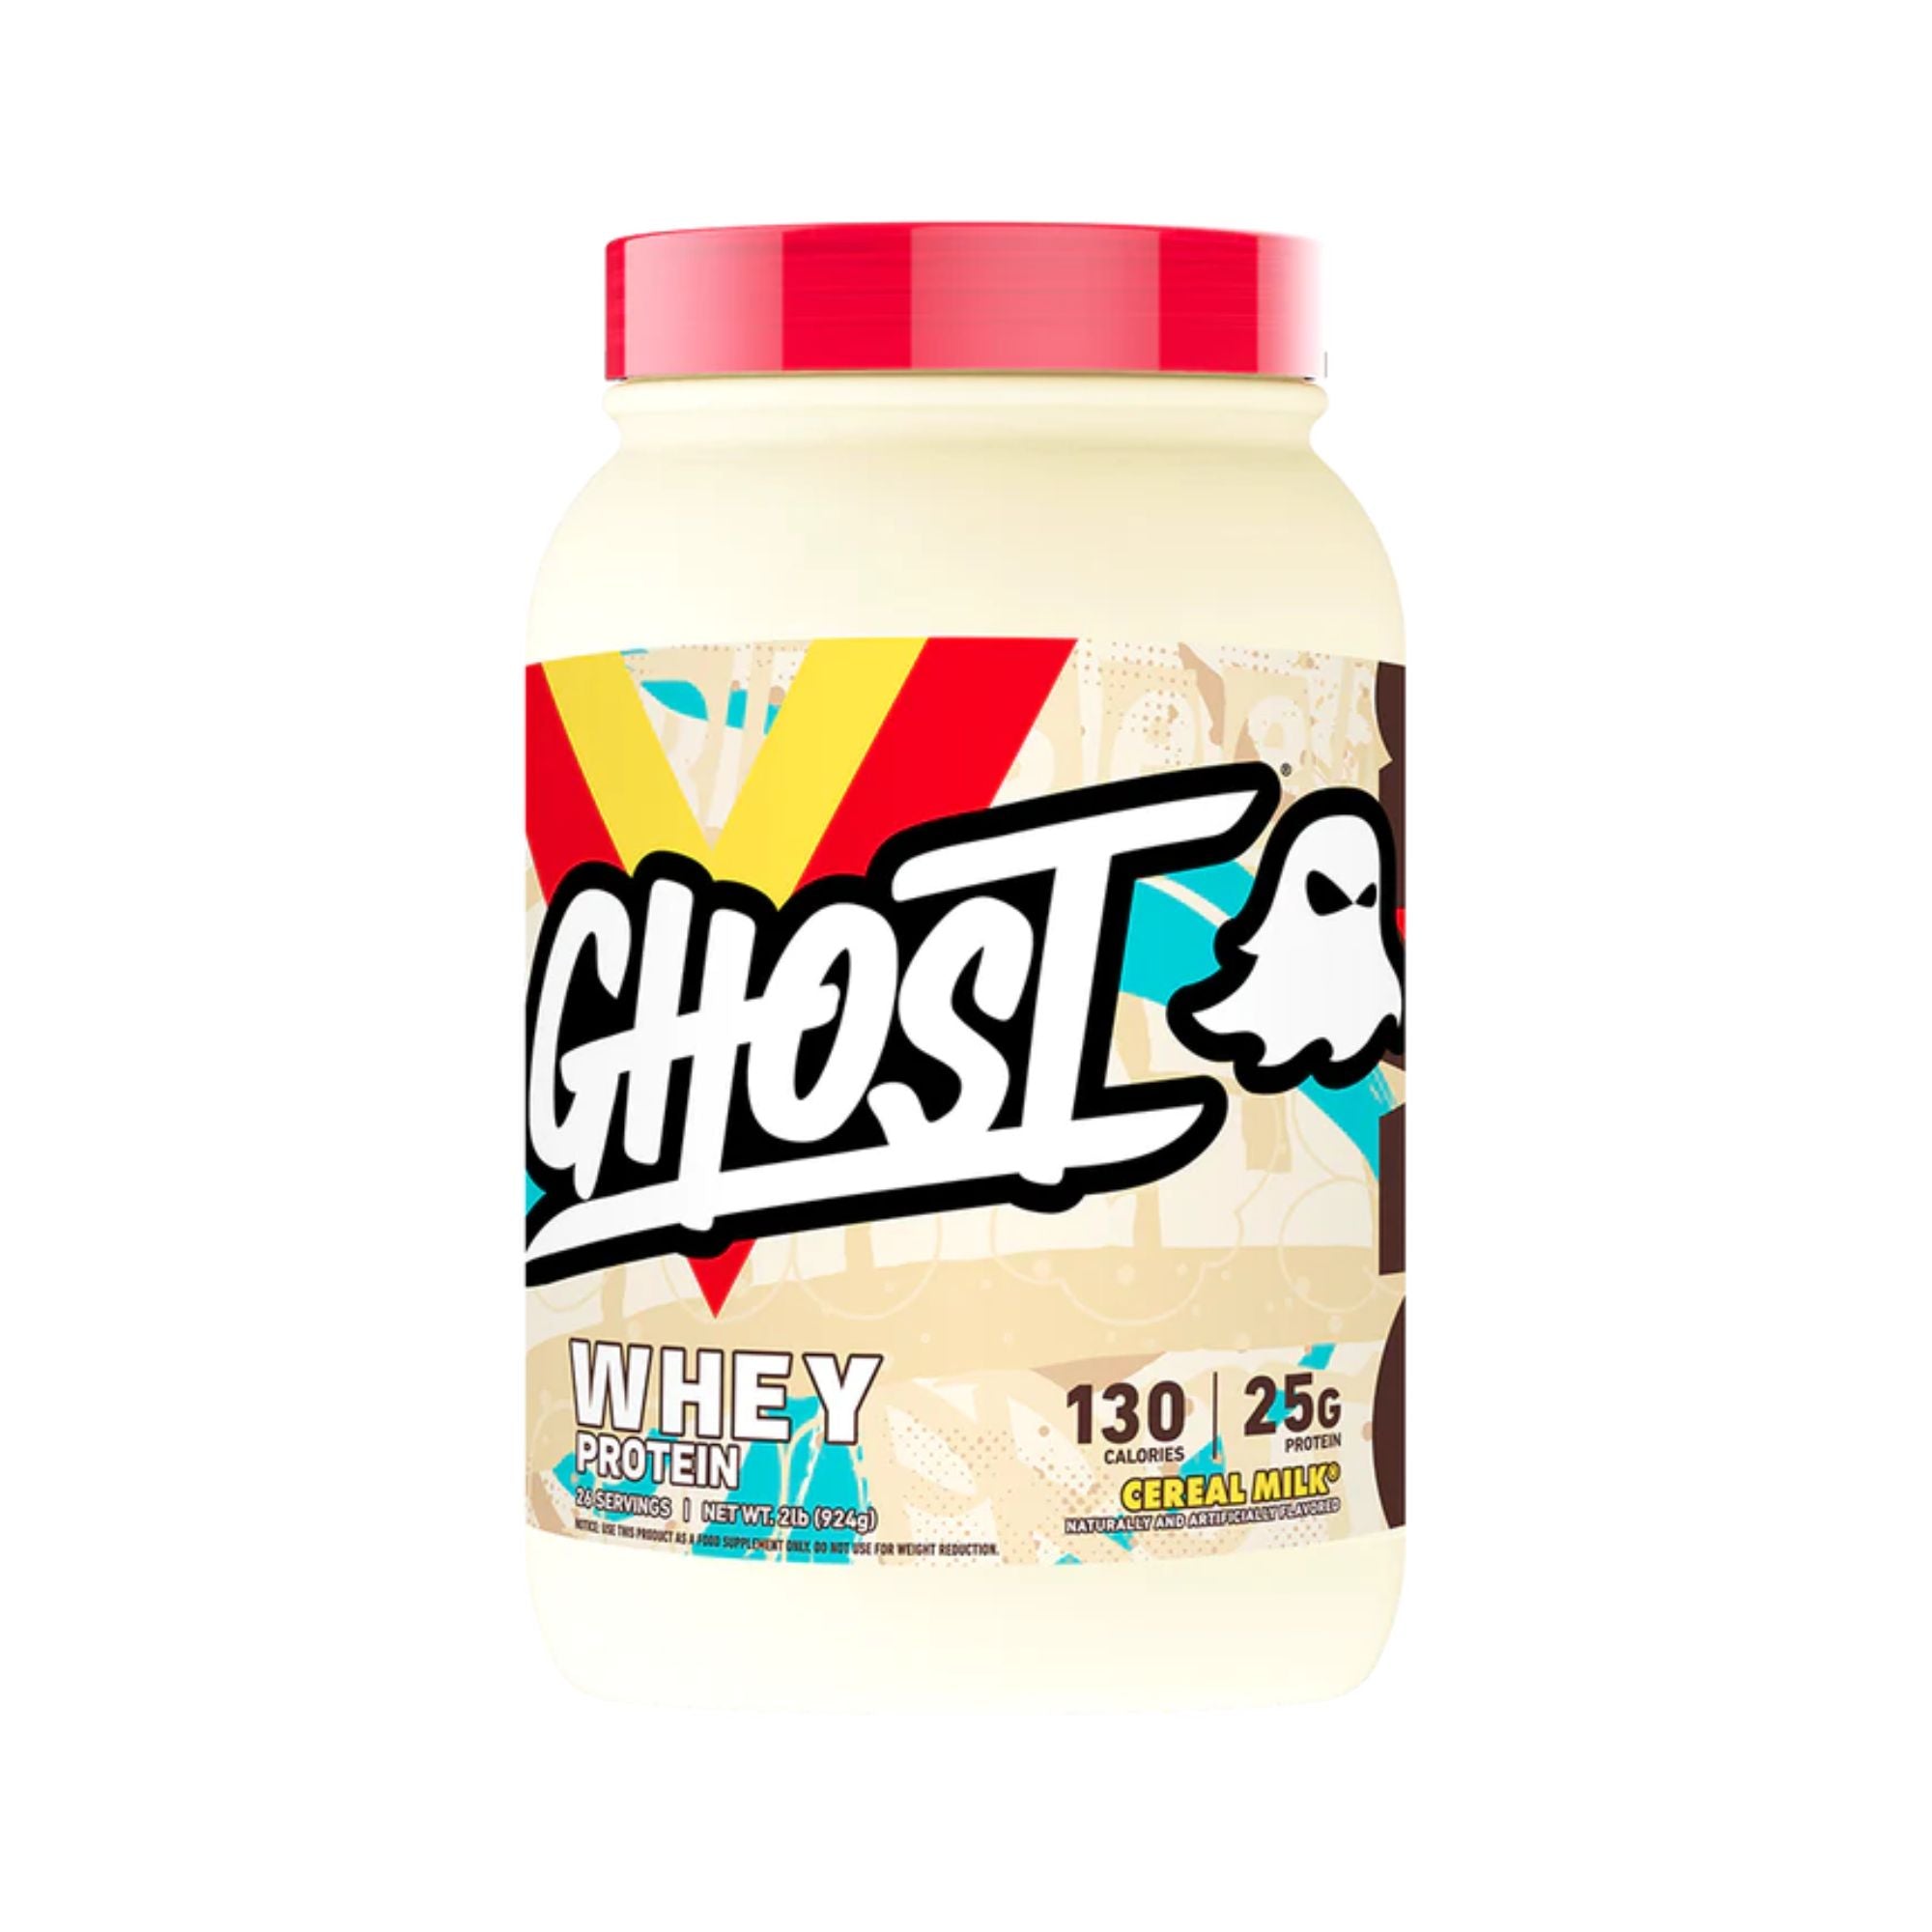 Ghost Whey Protein Powder